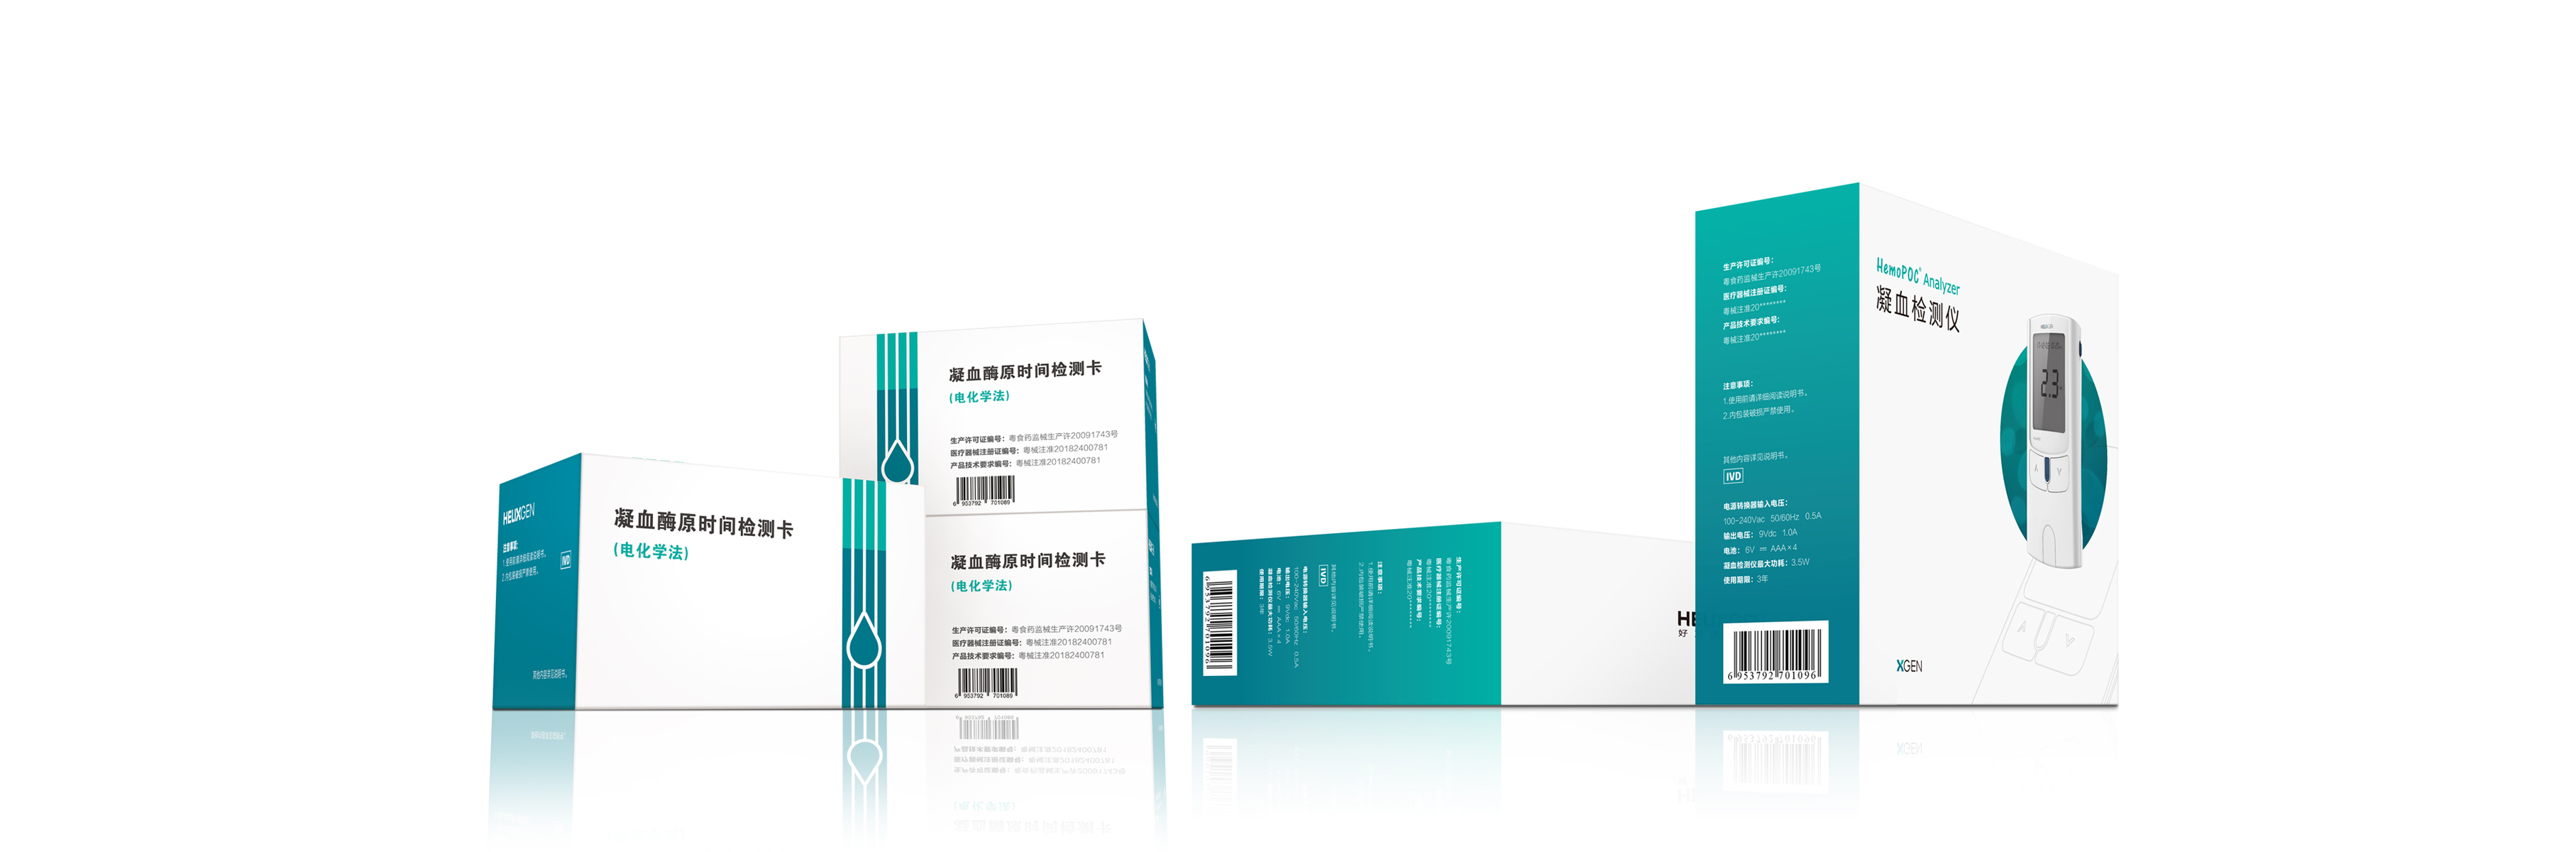 PT Portable hematology analyzer- Series packaging